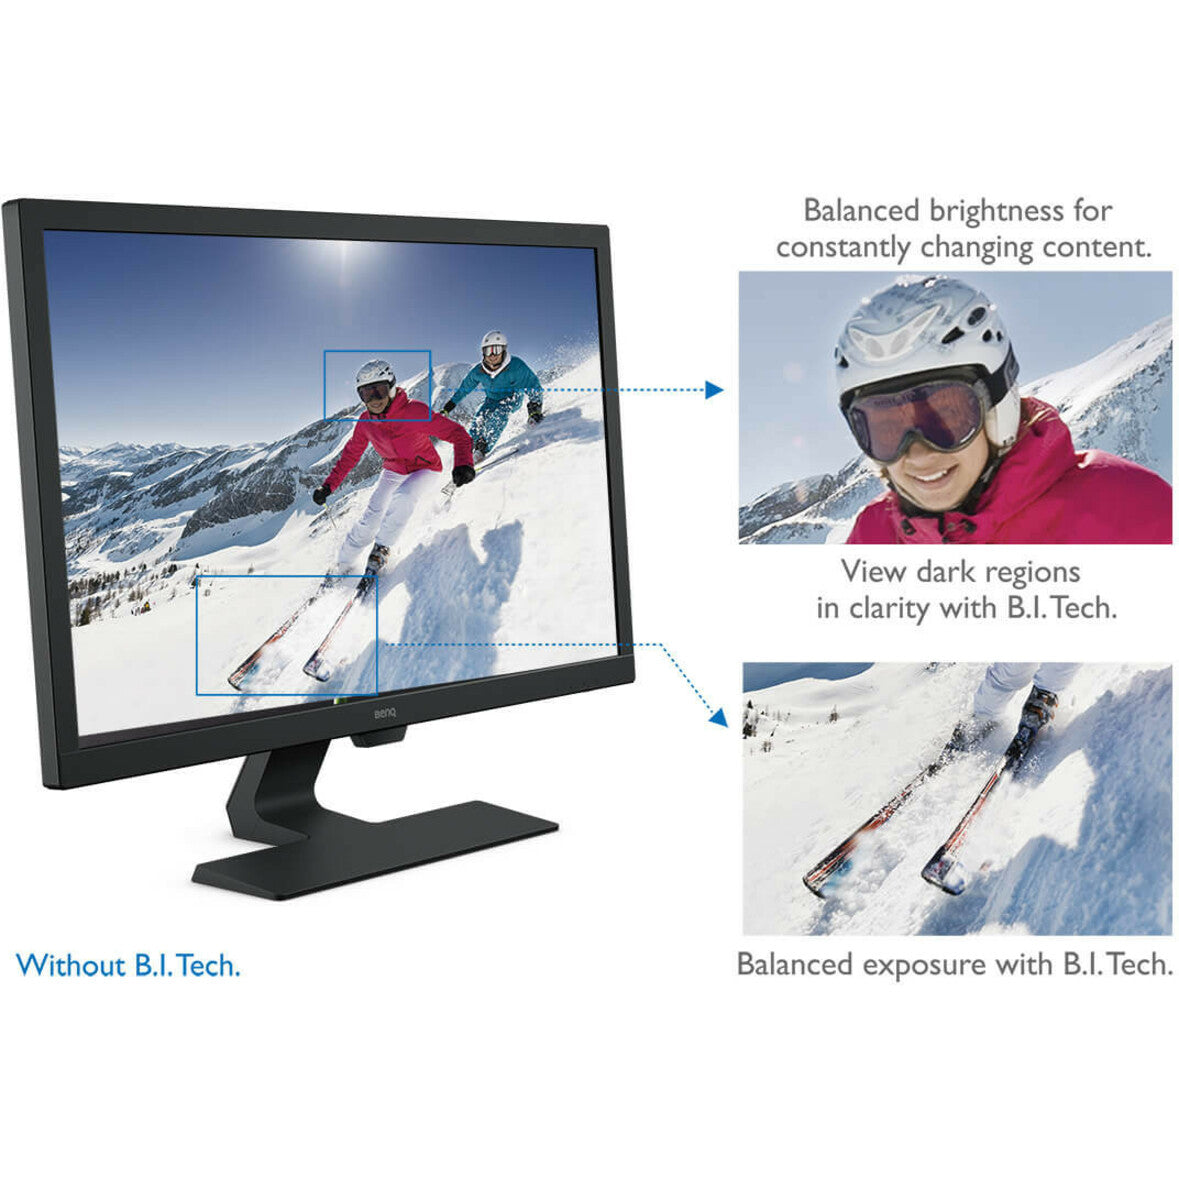 BenQ GL2780 27" Full HD LCD Monitor - Eye-Care Stylish Monitor [Discontinued]